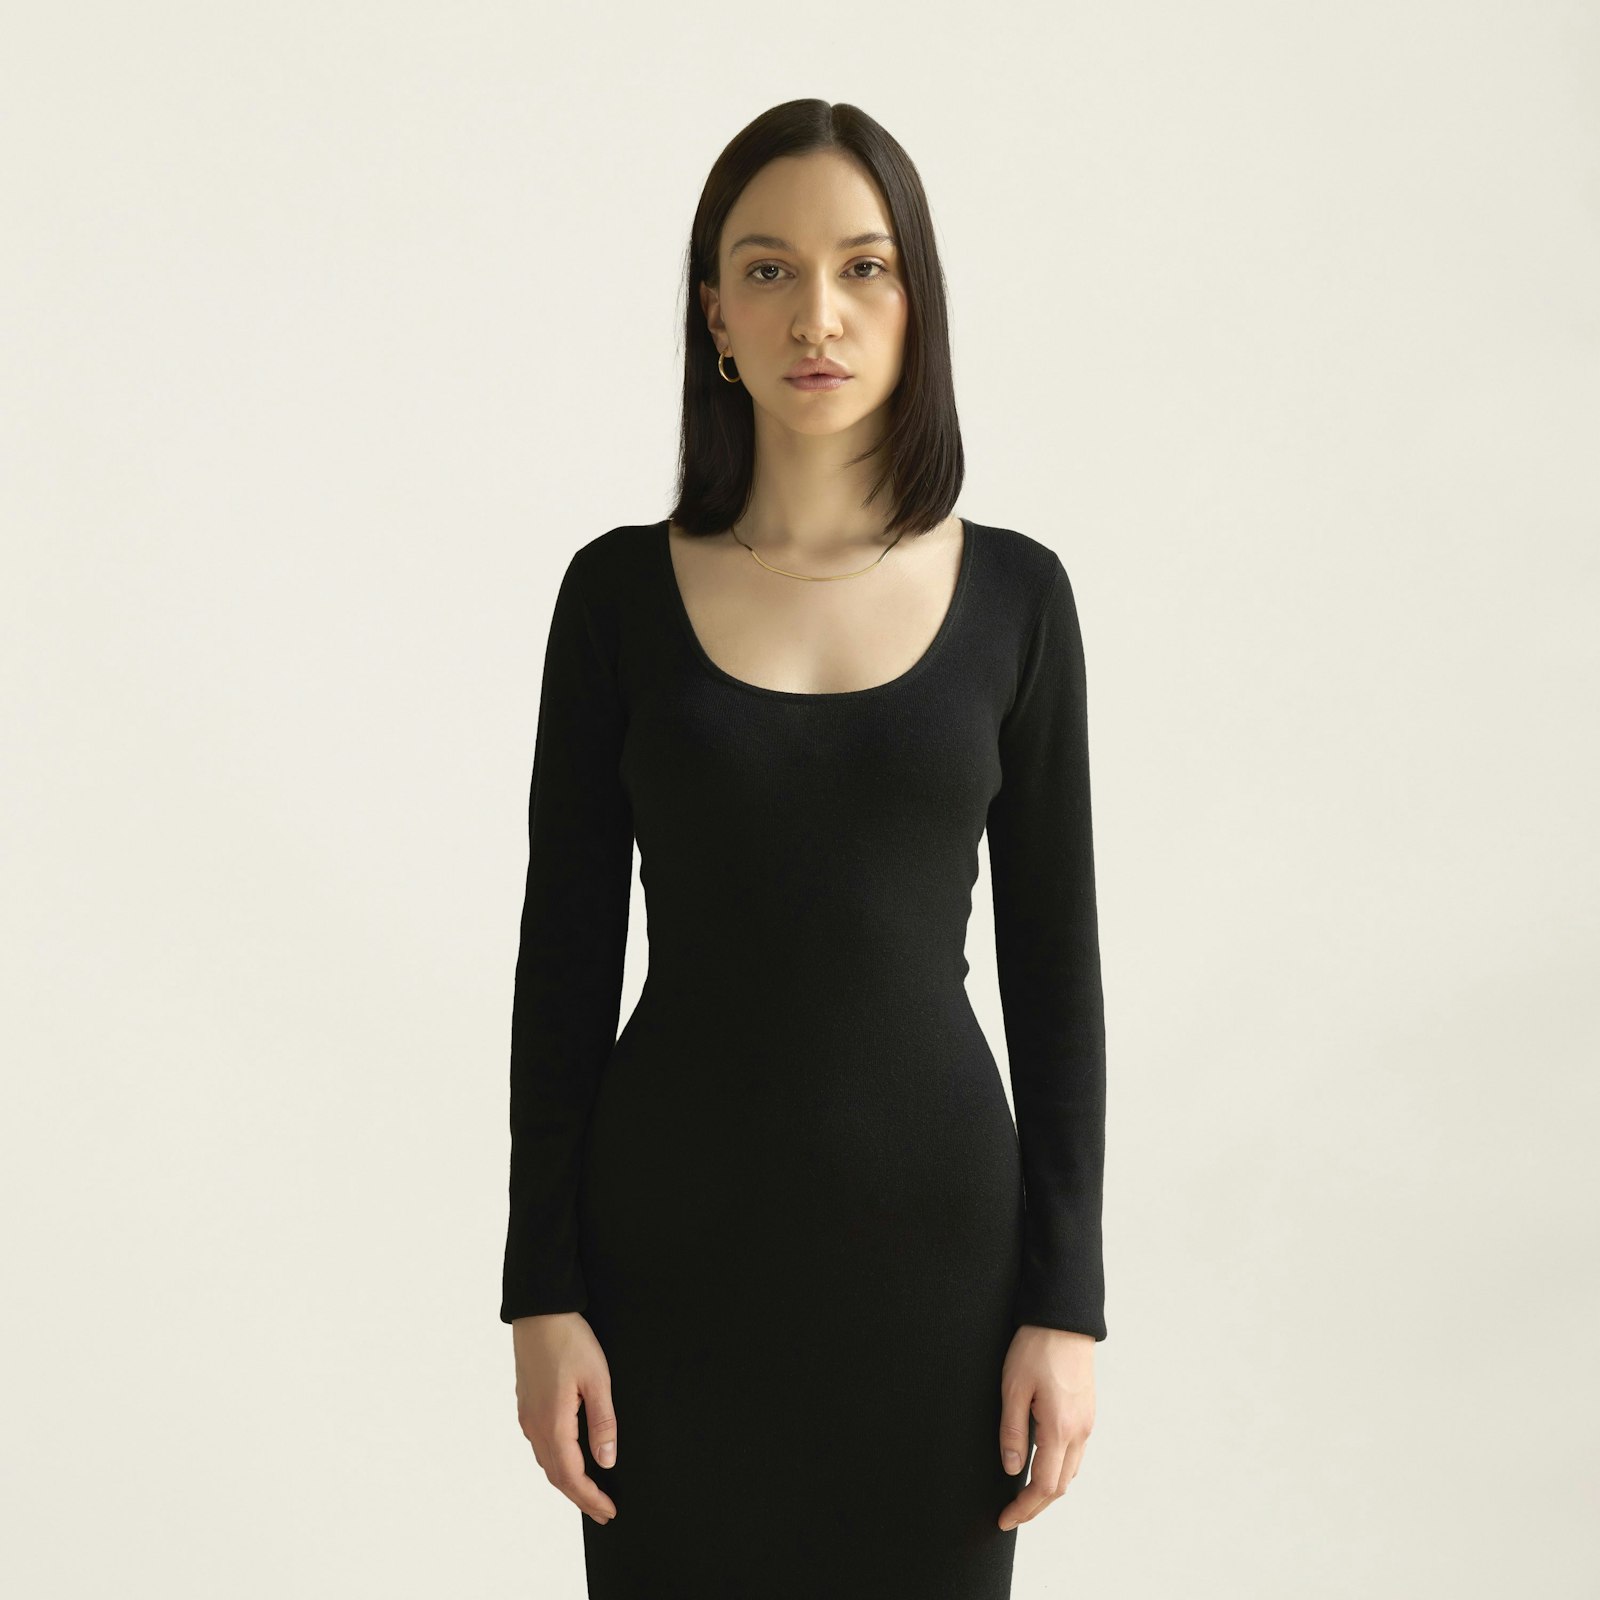 Fatherlight LS Black Dress (Eloise)_1764 (1).jpeg